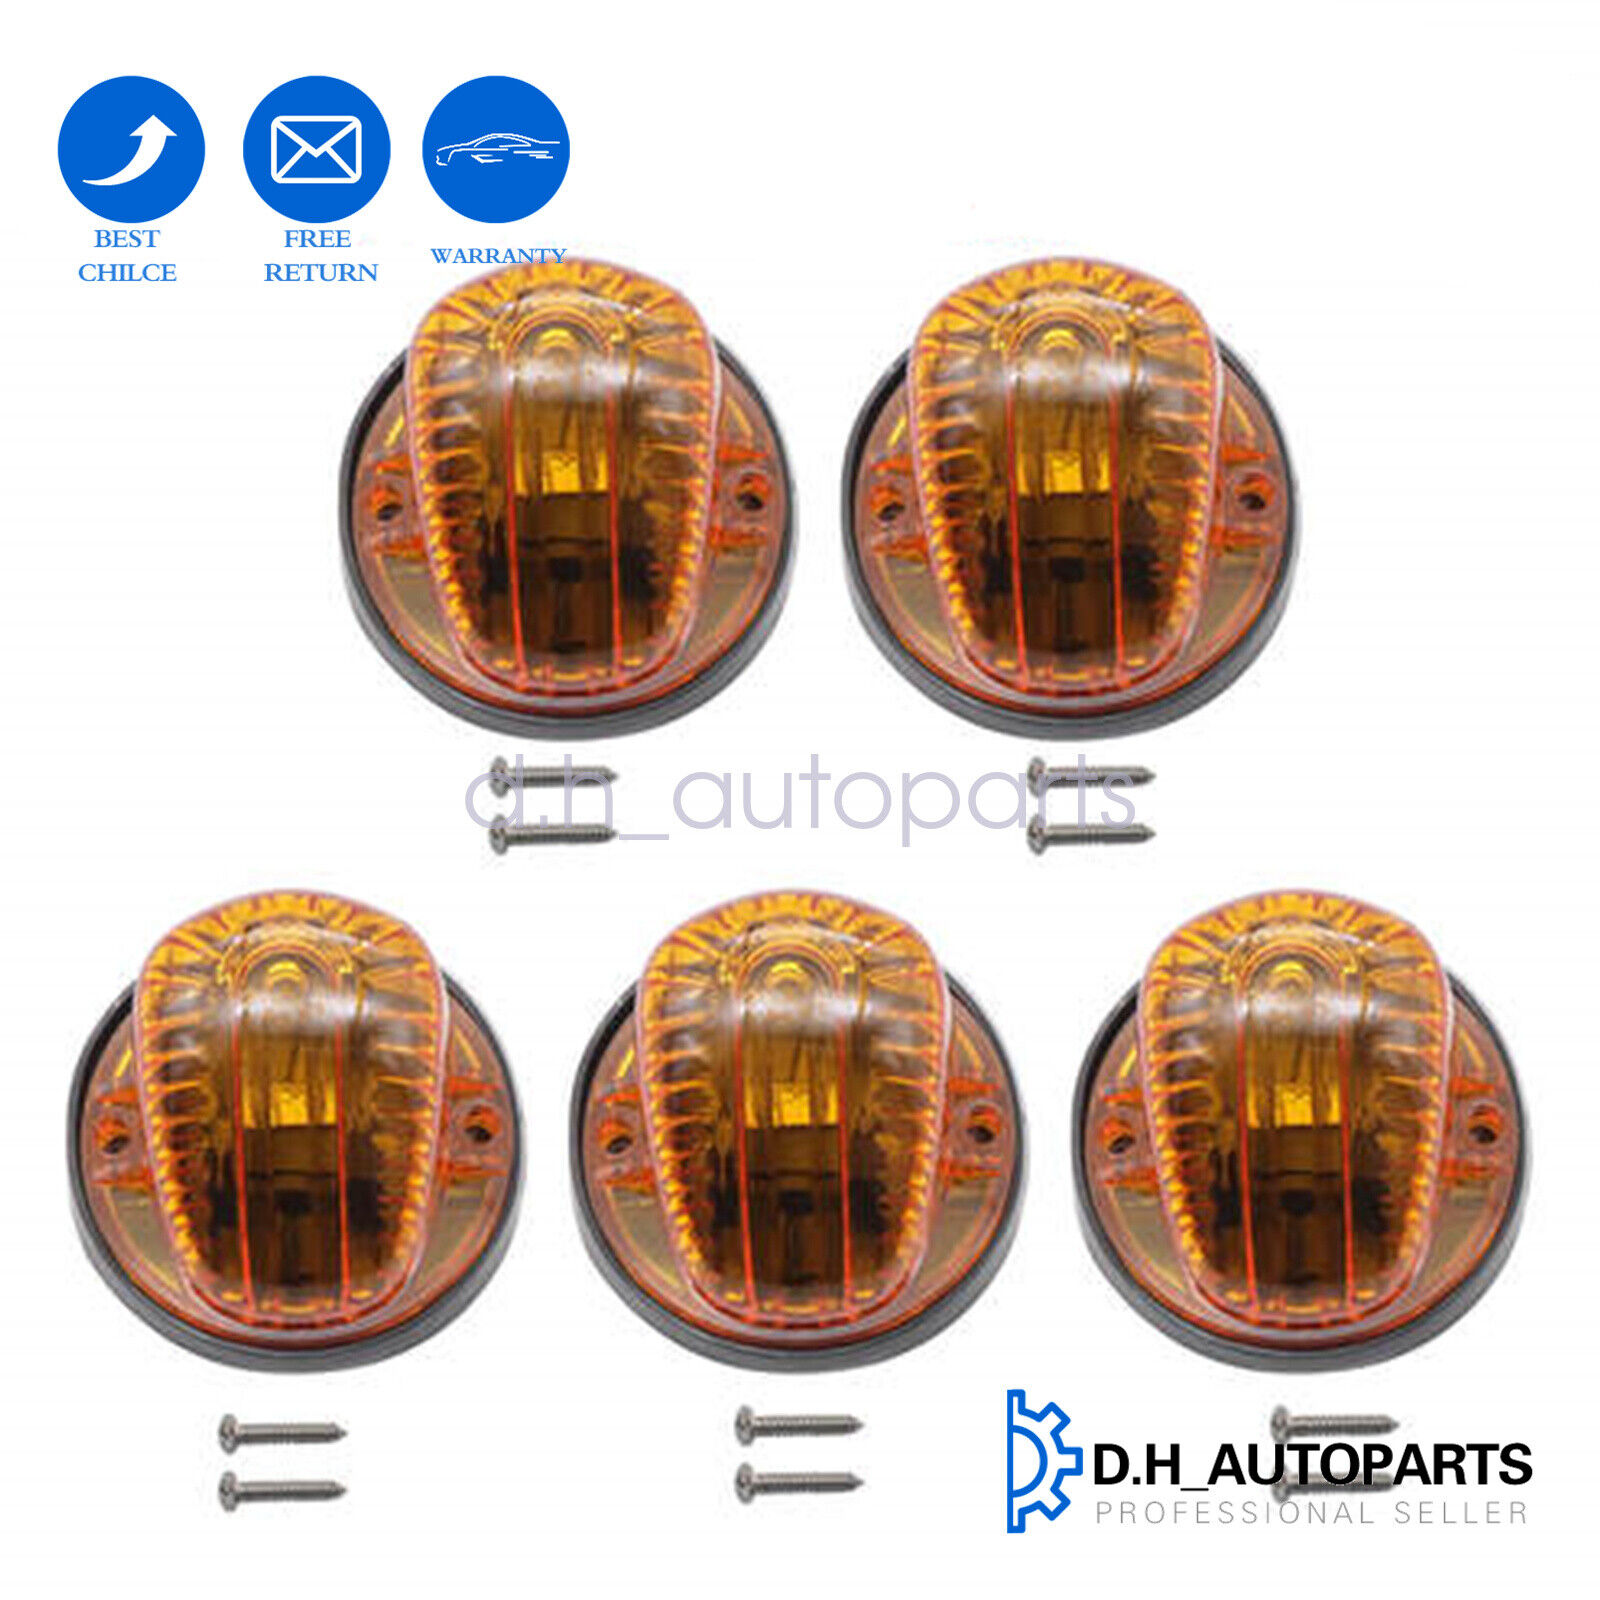 5PCS For 73-87 Chevy GMC C/K Cab Marker Light Covers + Base Housing + Amber LED